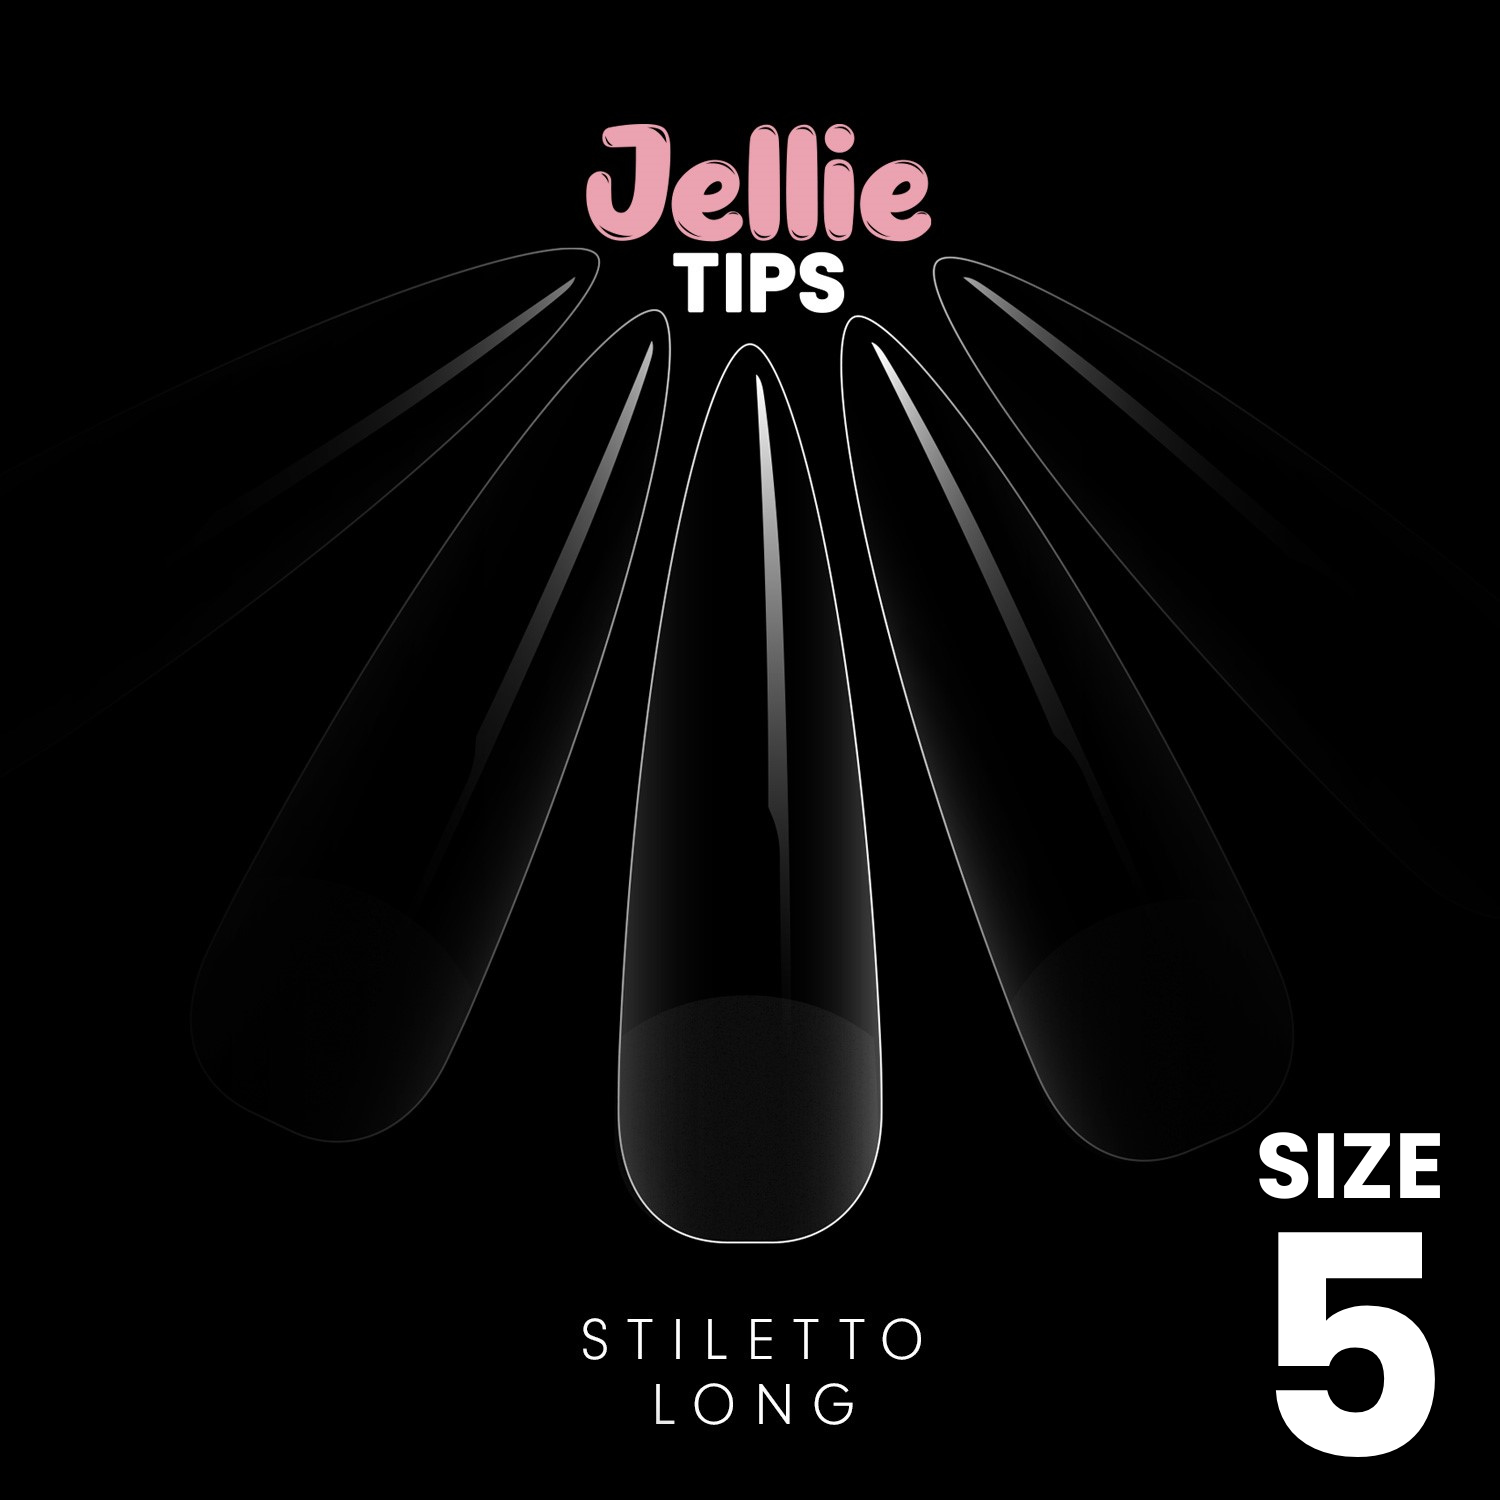 Halo Jellie Nail Tips Stiletto Long, Sizes 5, 50 One Size